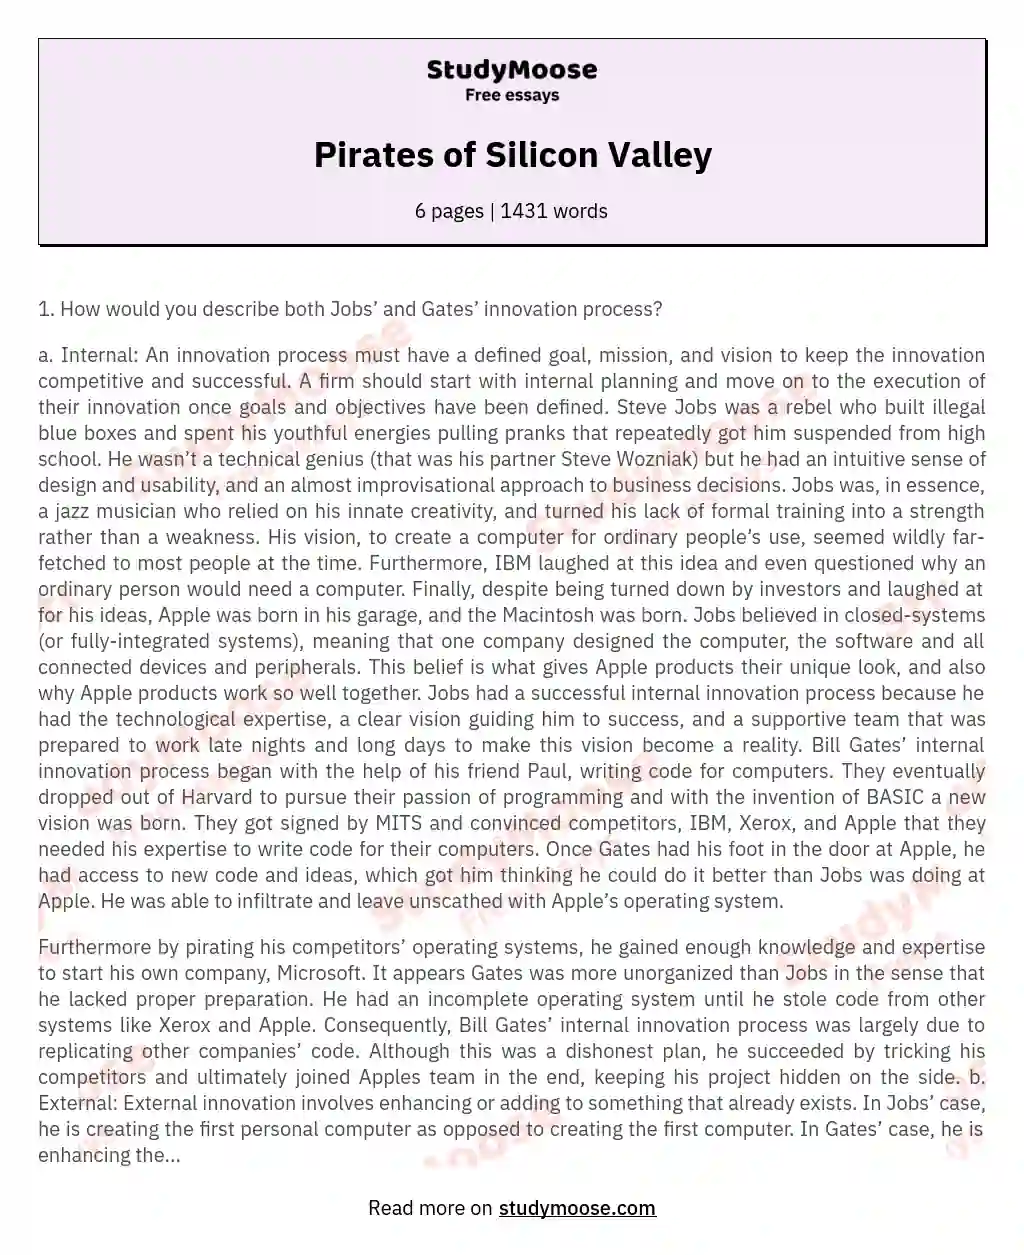 Pirates of Silicon Valley essay